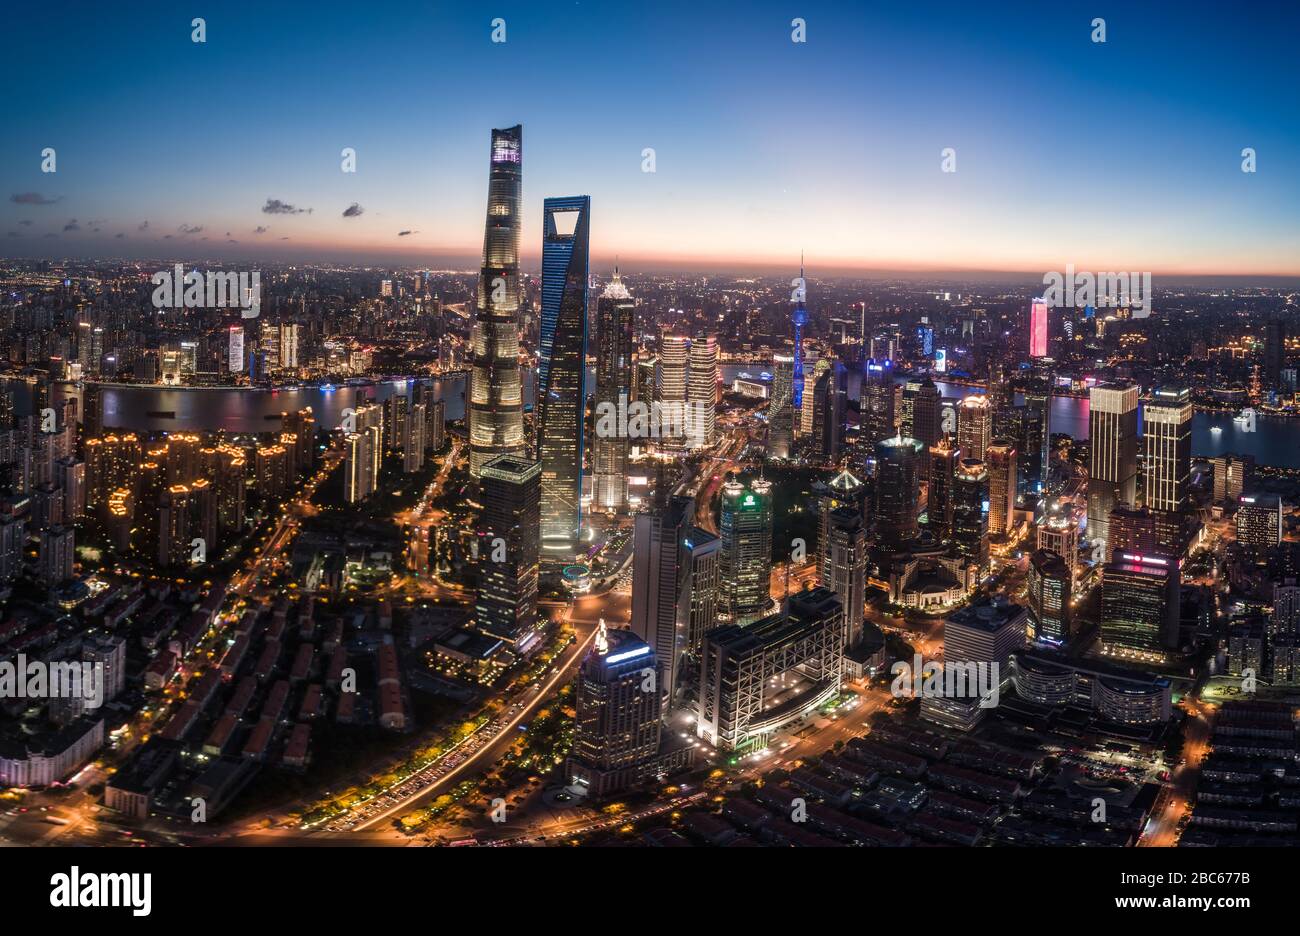 Shanghai, China - Jul 18, 2018: aerial view of Lujiazui, Shanghai, at sunset Stock Photo